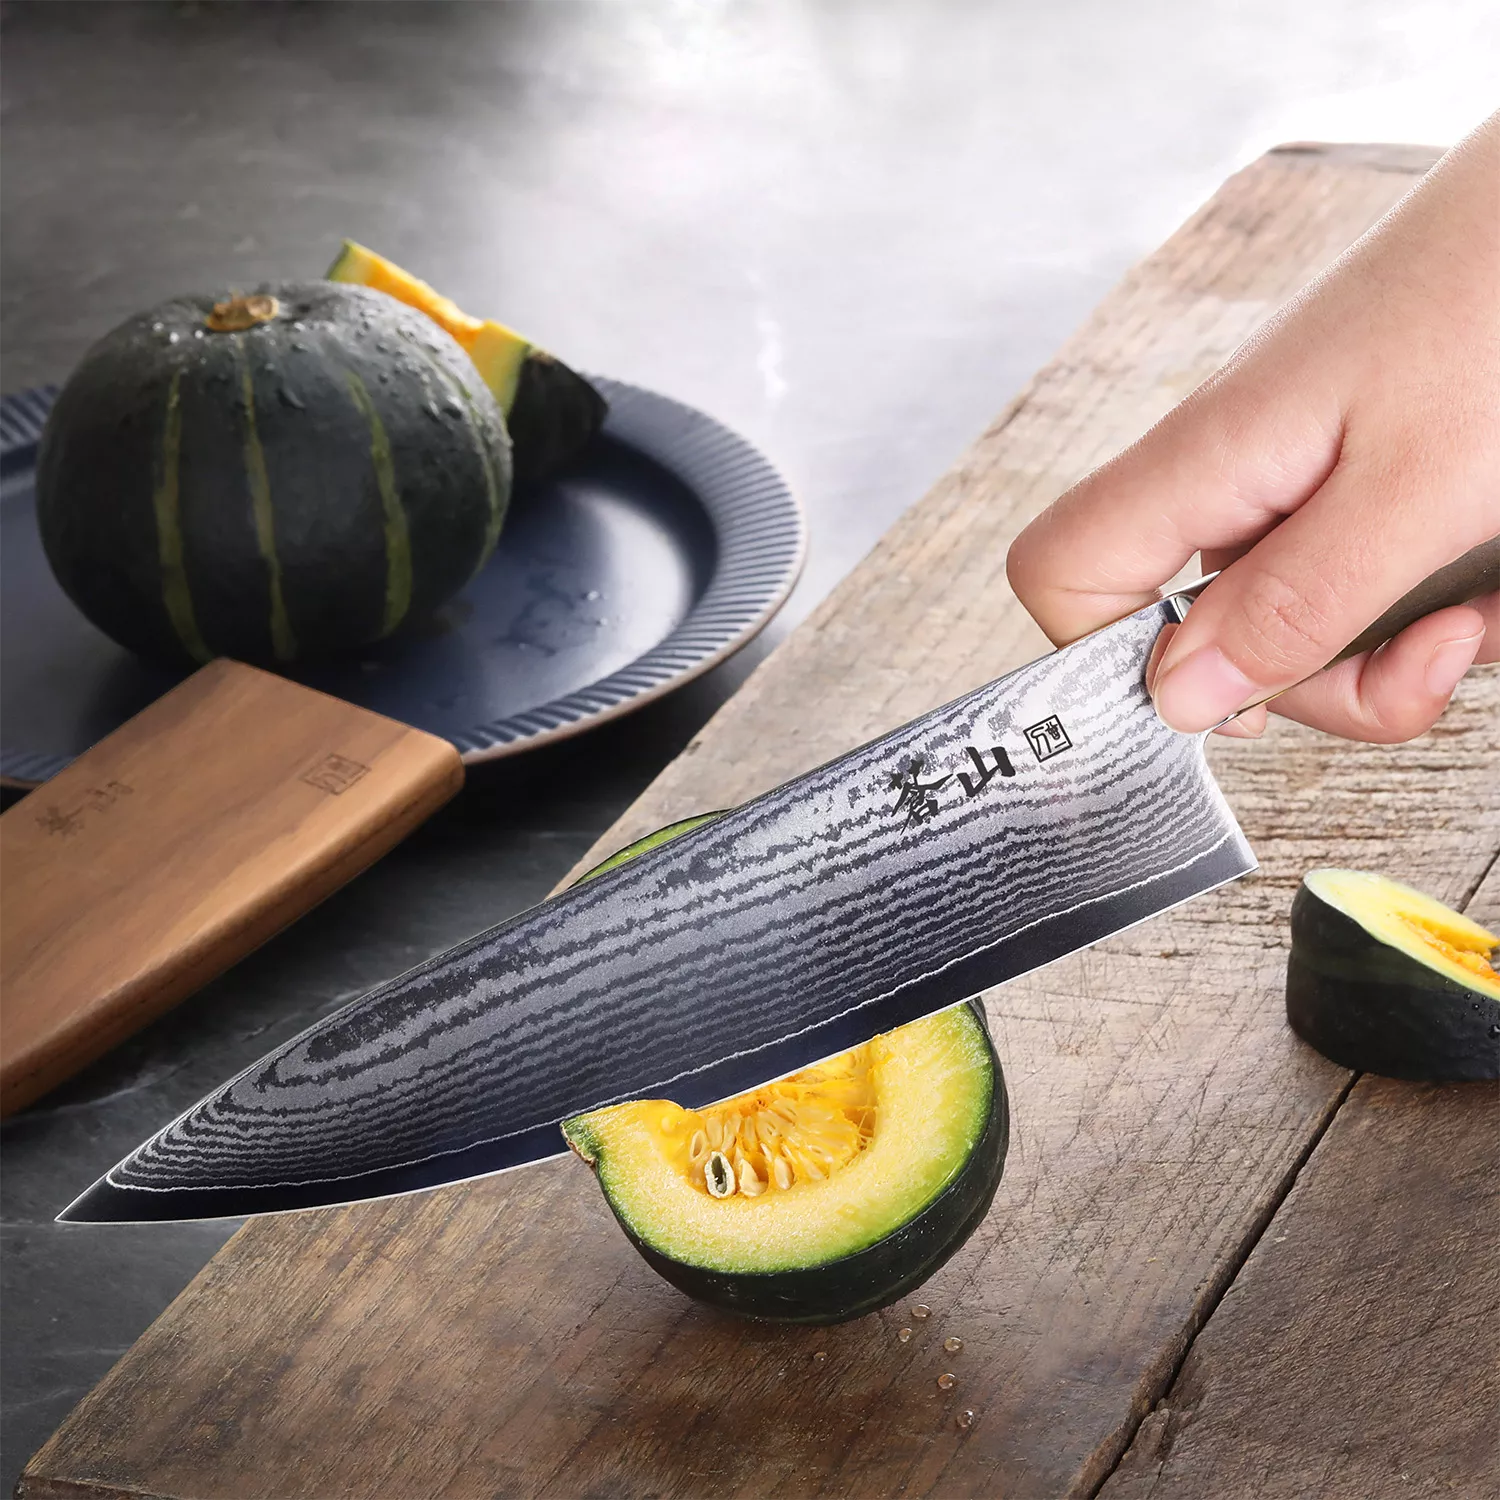 HAKU Series 8-Inch Chef's Knife with Sheath, Forged X-7 Damascus Steel –  Cangshan Cutlery Company